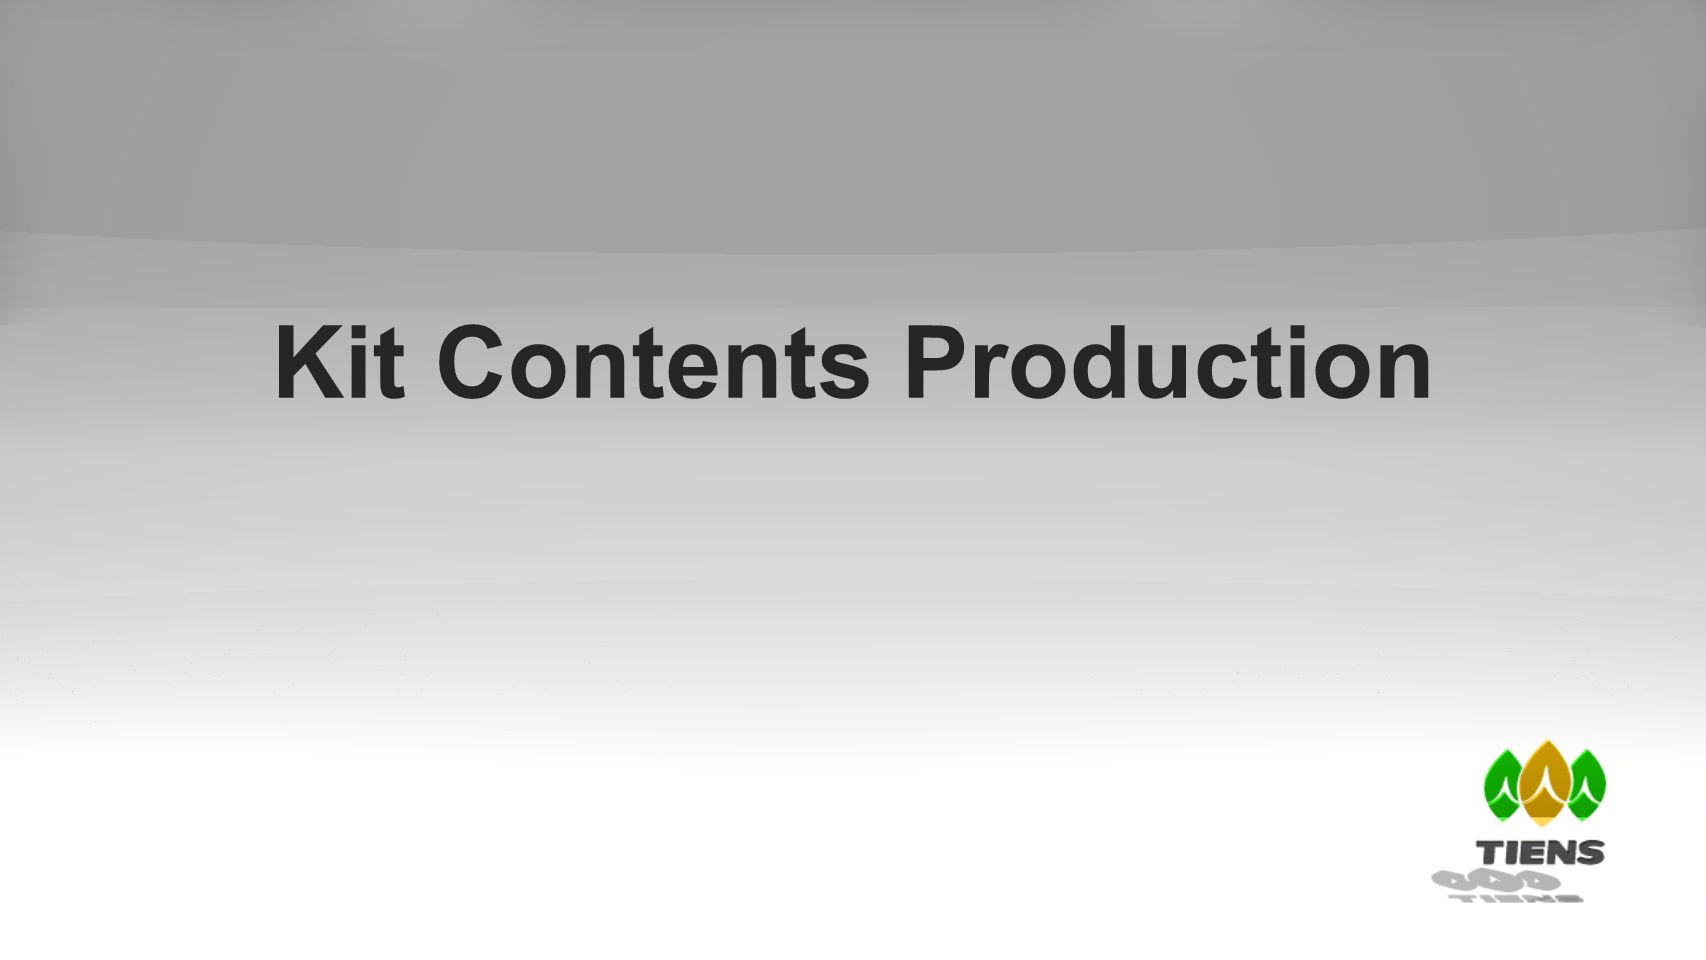 Kit Contents Production